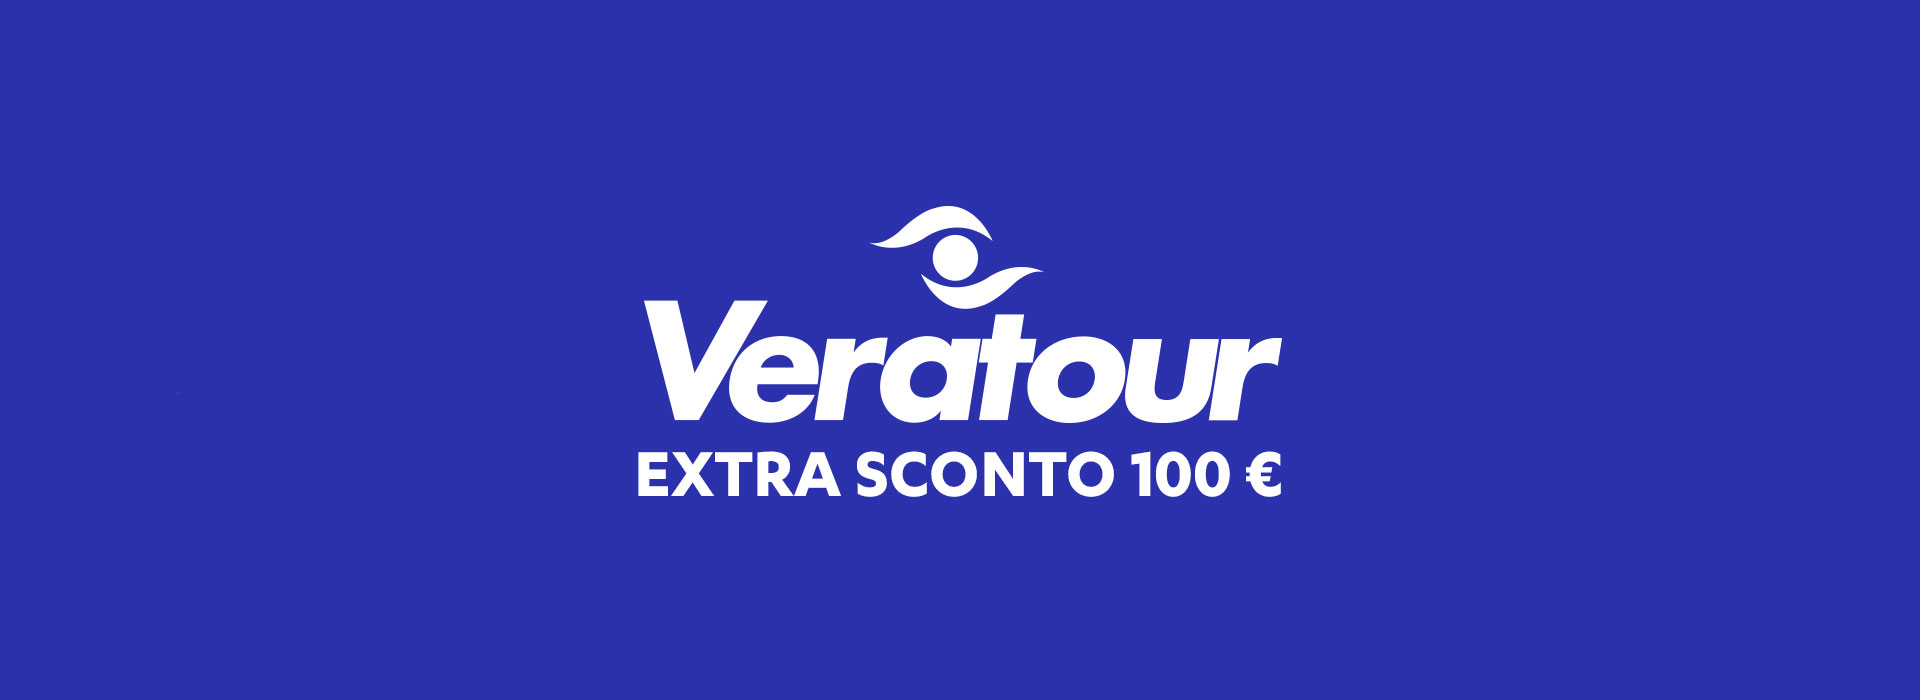 Flash Sale Veratour: EXTRA SCONTO 100 €